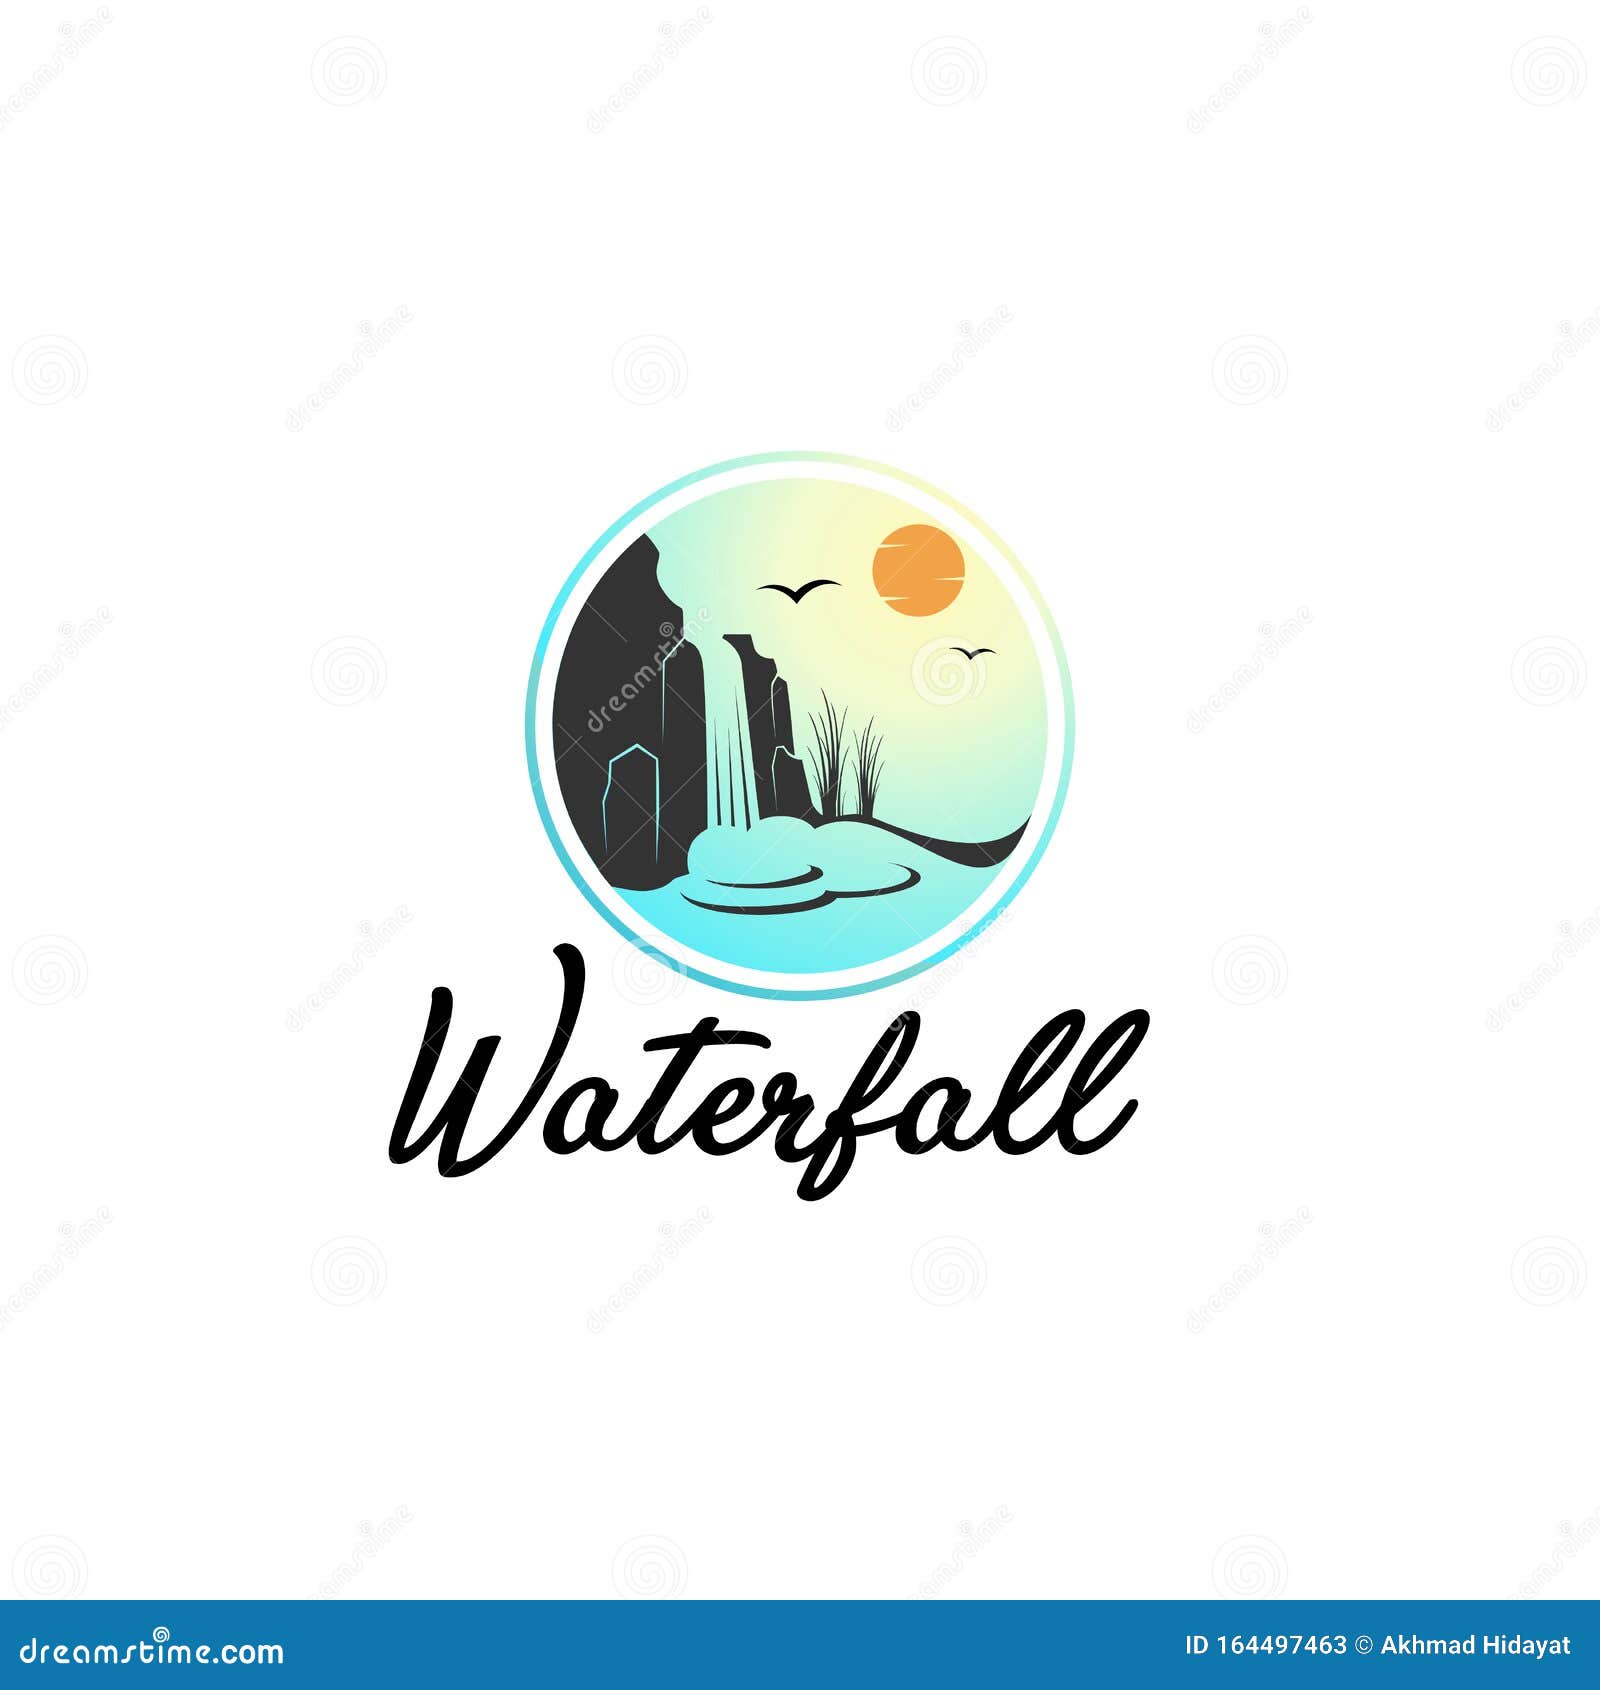 the waterfall logo  tamplate